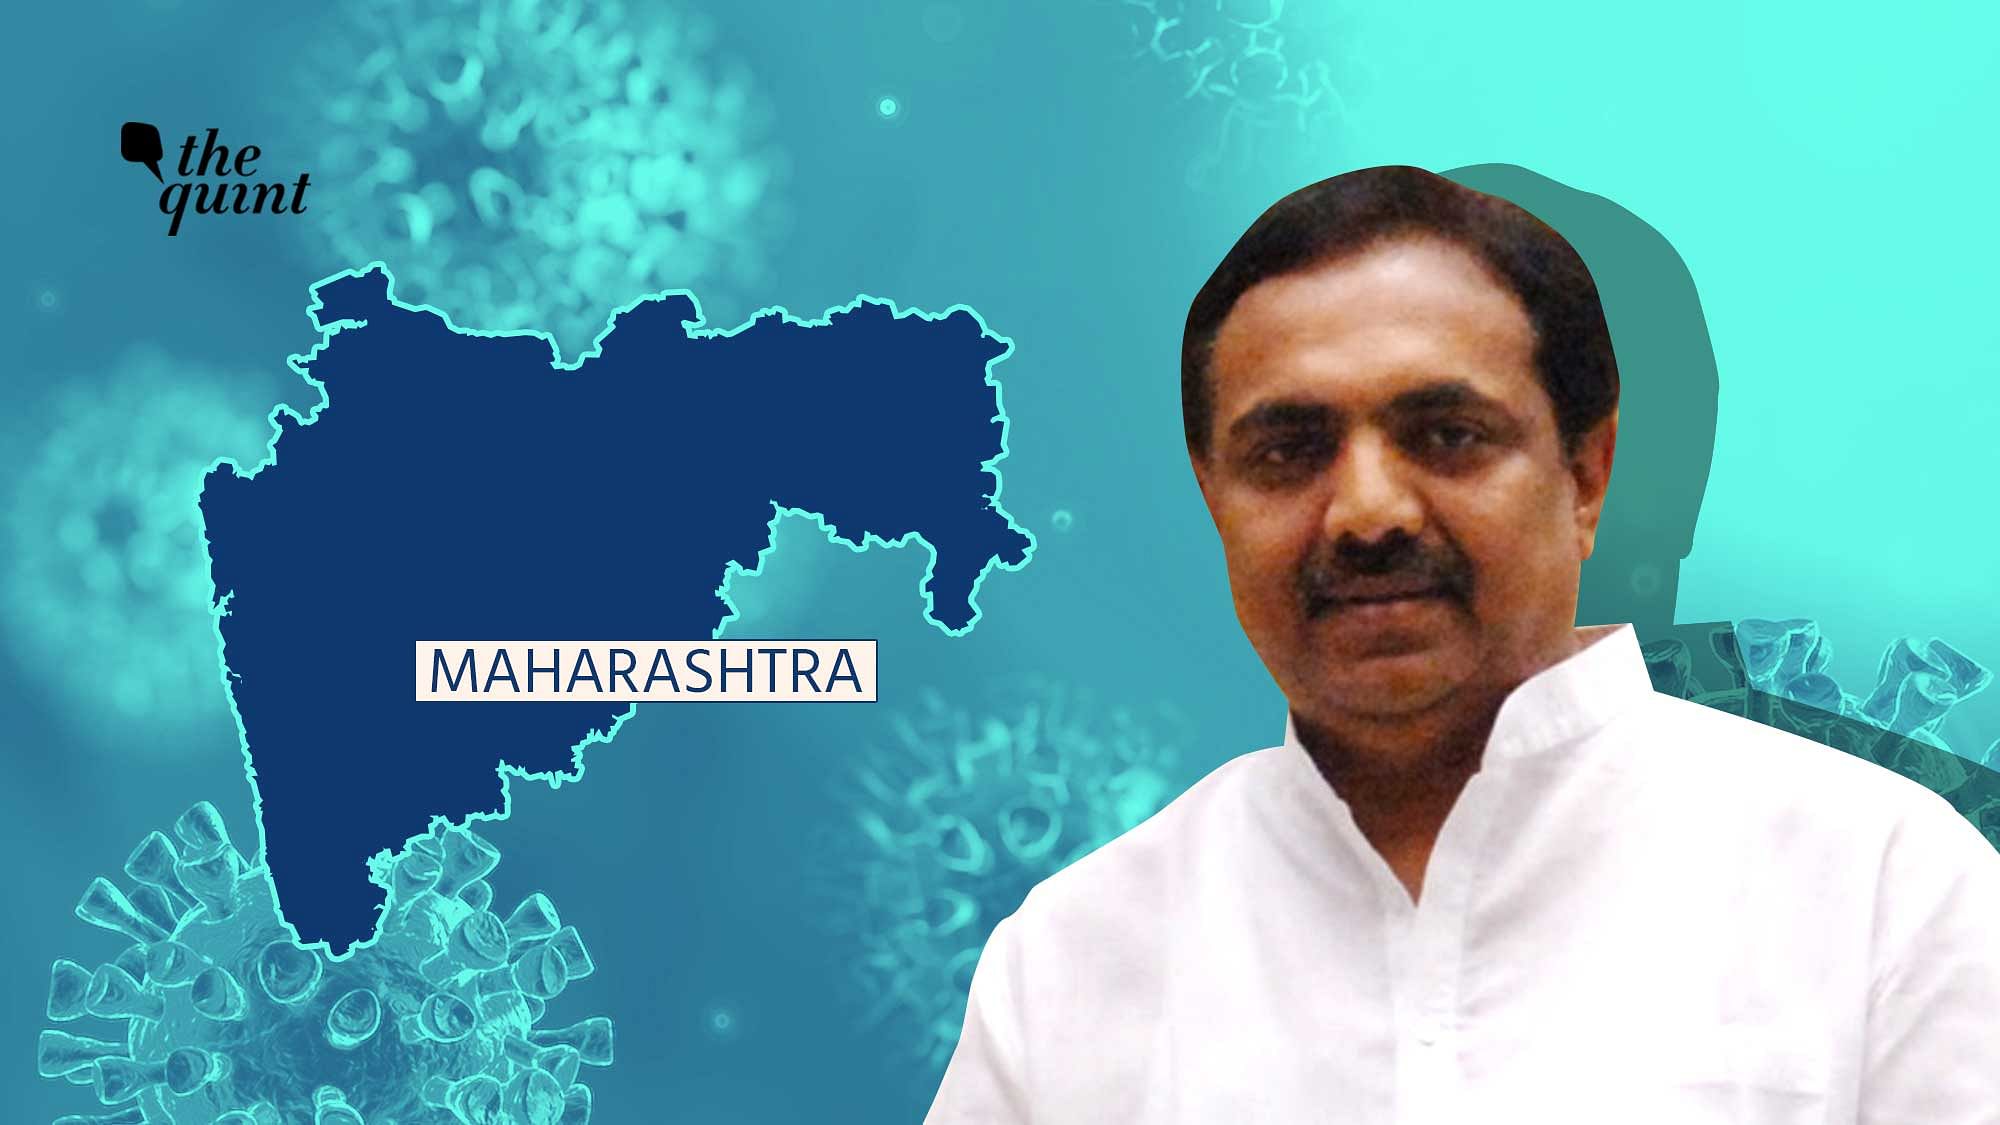 Image of Jayant Patil, President, Nationalist Congress Party, Maharashtra &amp; Maharashtra map used for representational purposes.